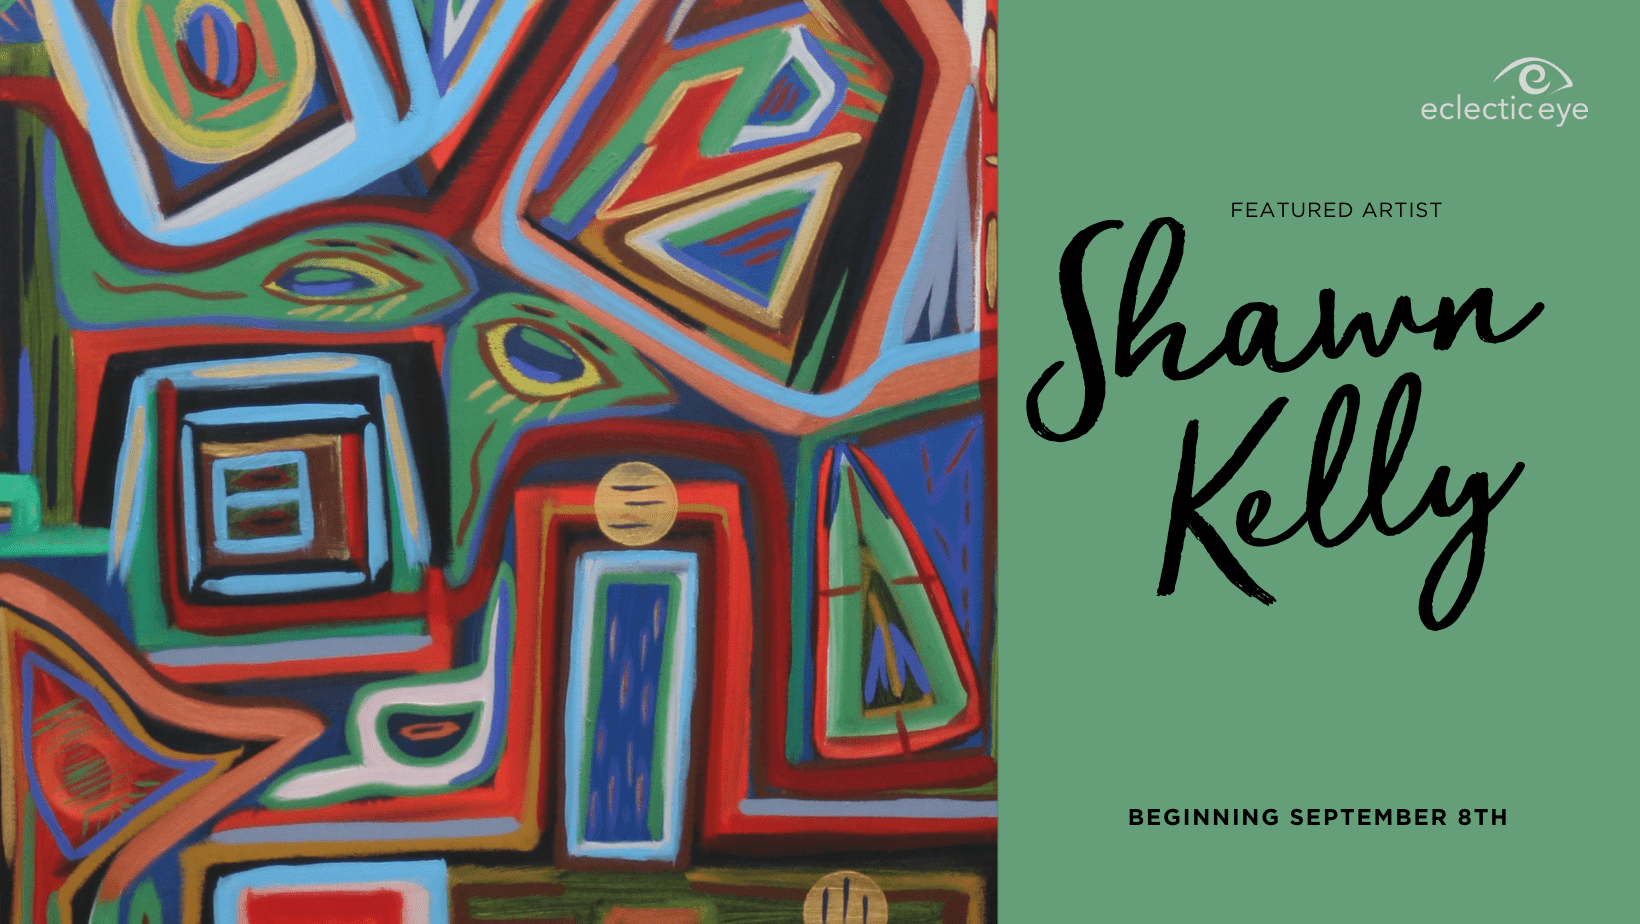 Featured Artist: Shawn Kelly. Beginning September 8th